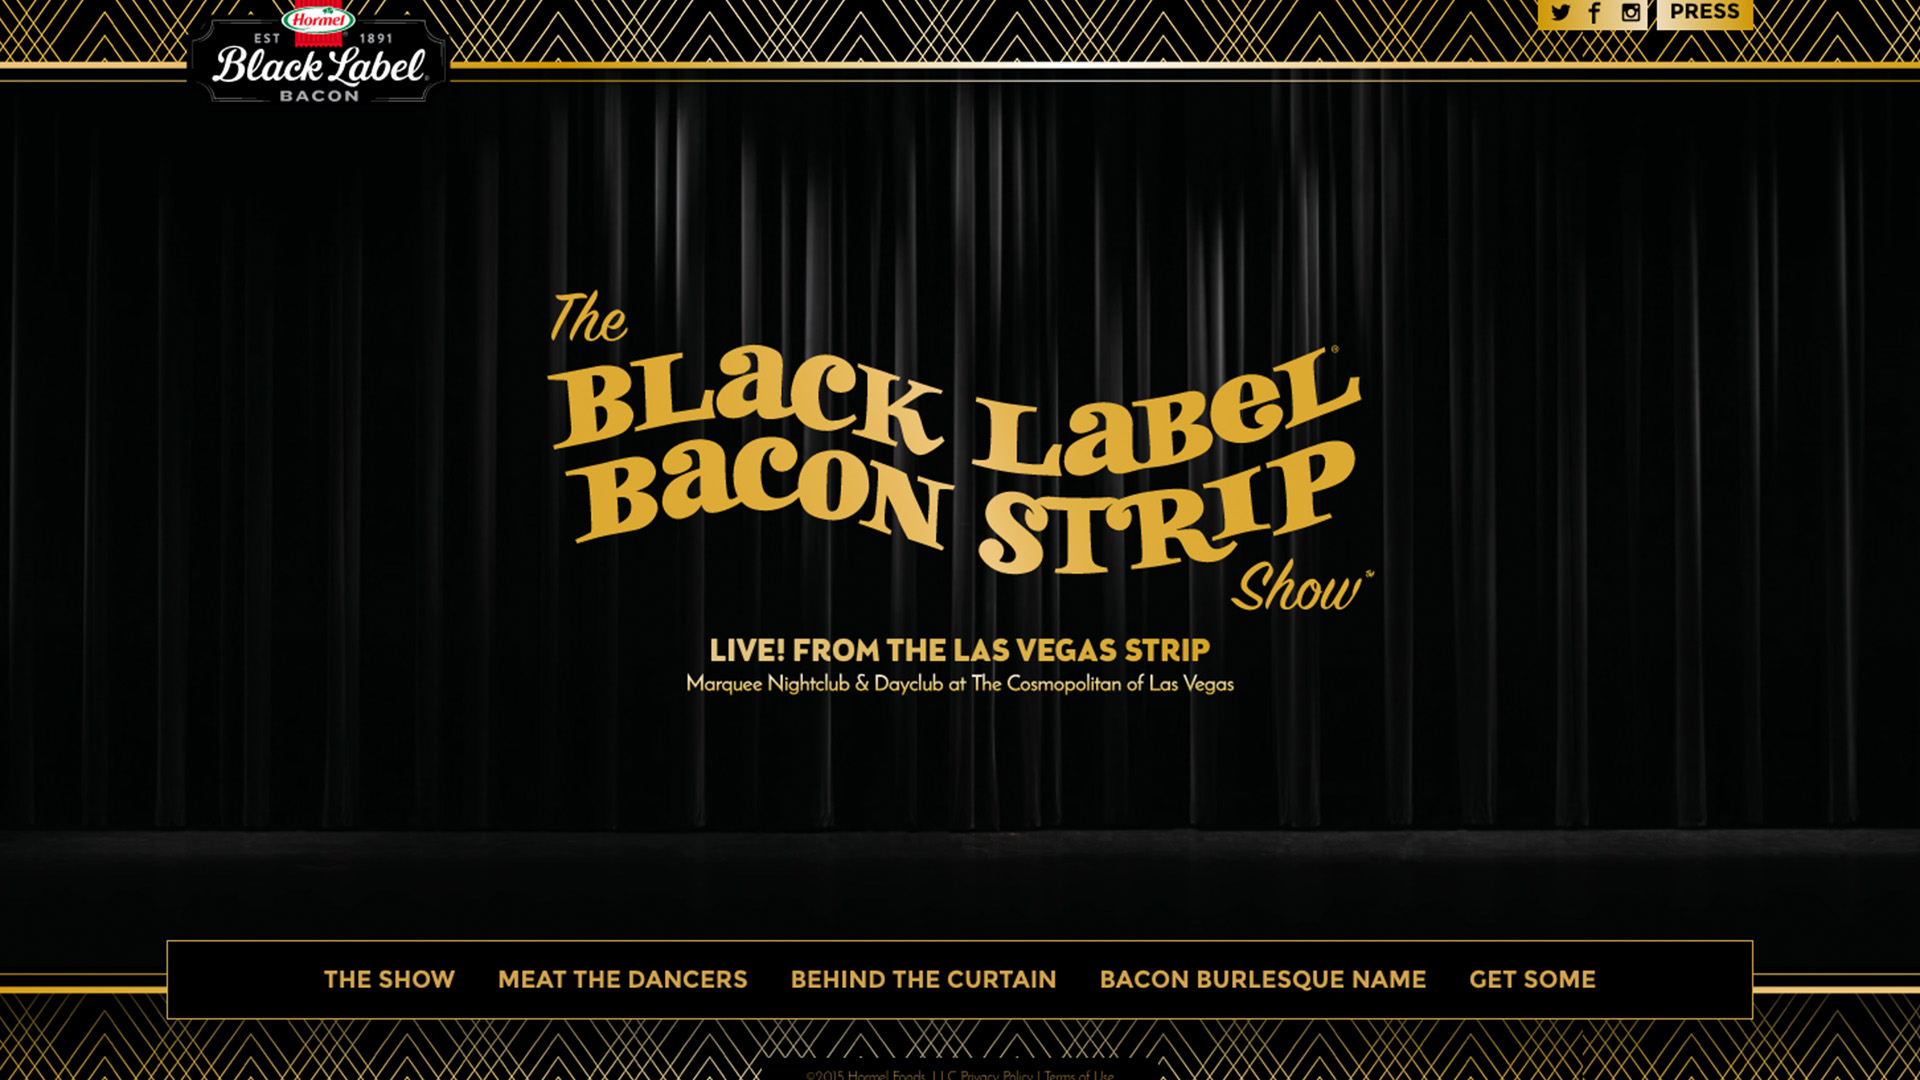 Black Label Bacon Strip Show